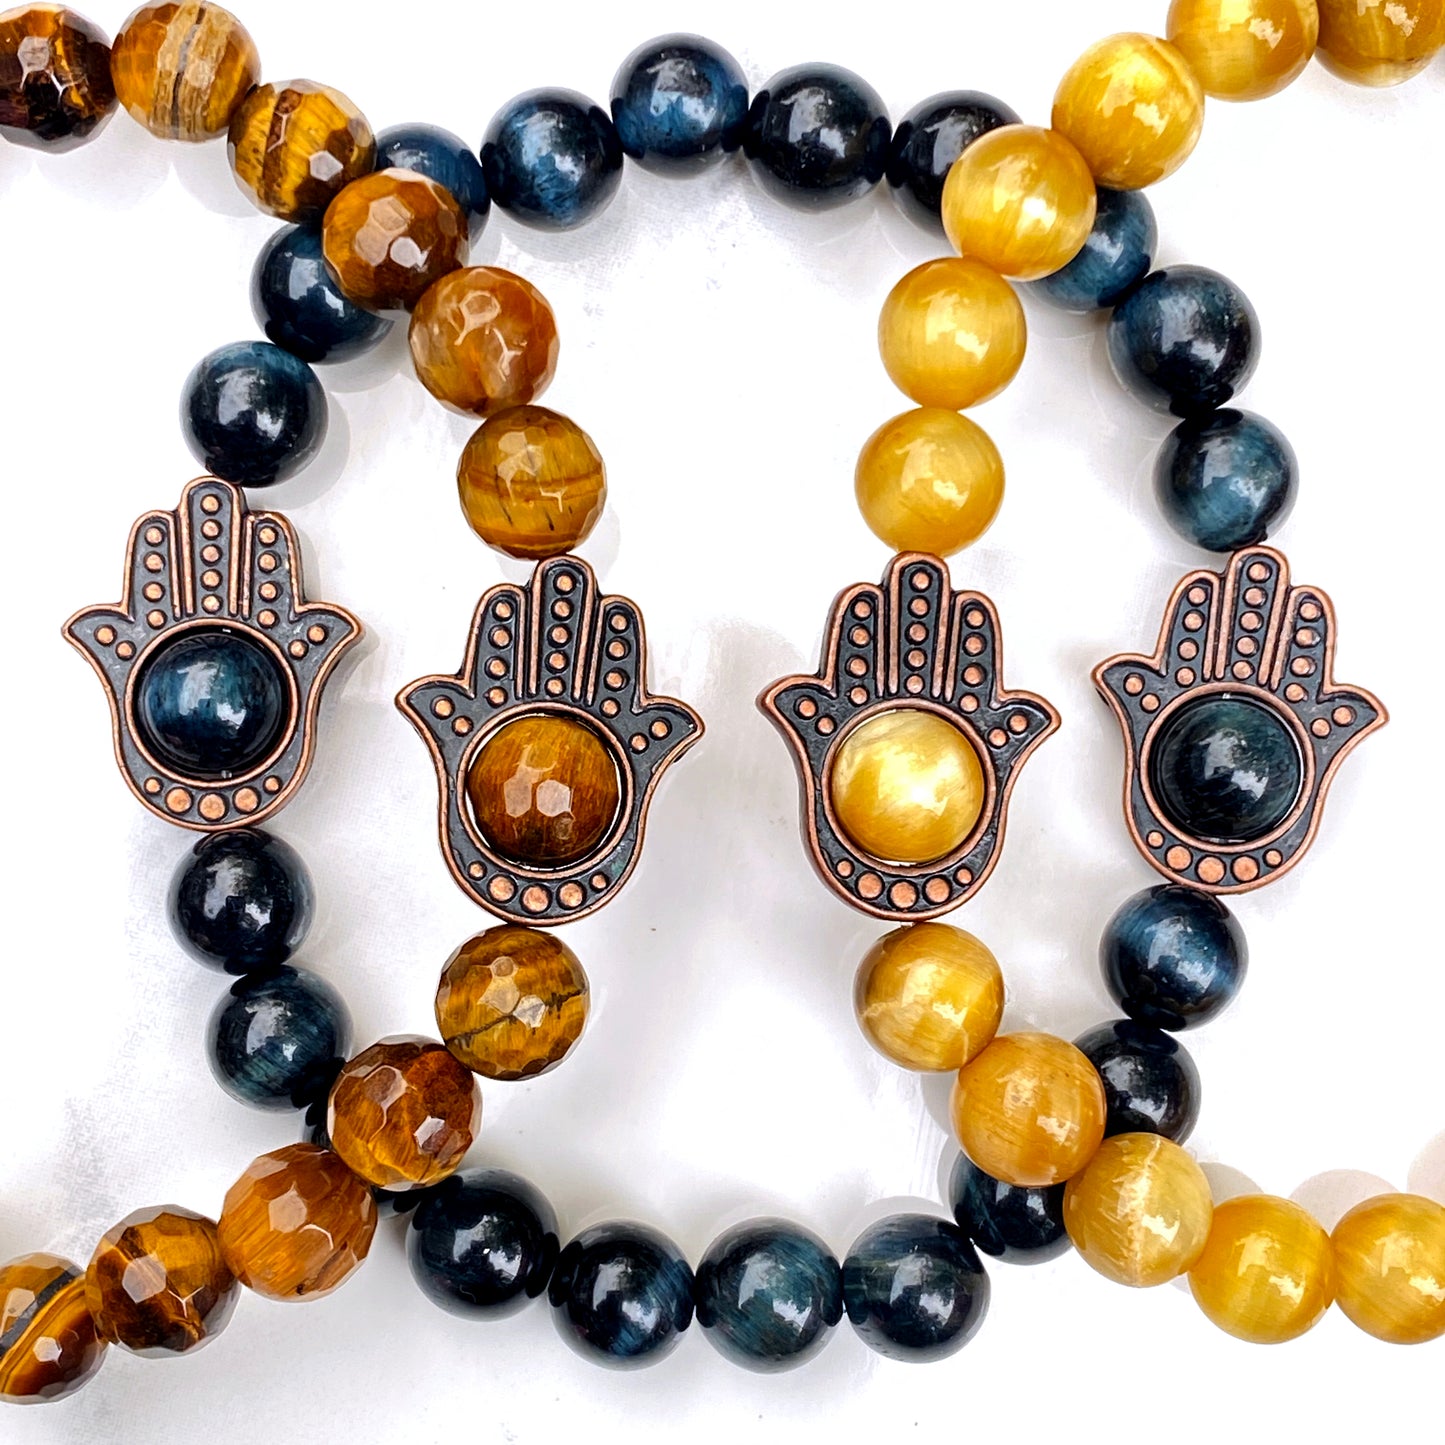 Men's Tiger Eye gemstone and copper Hamsa bracelet.